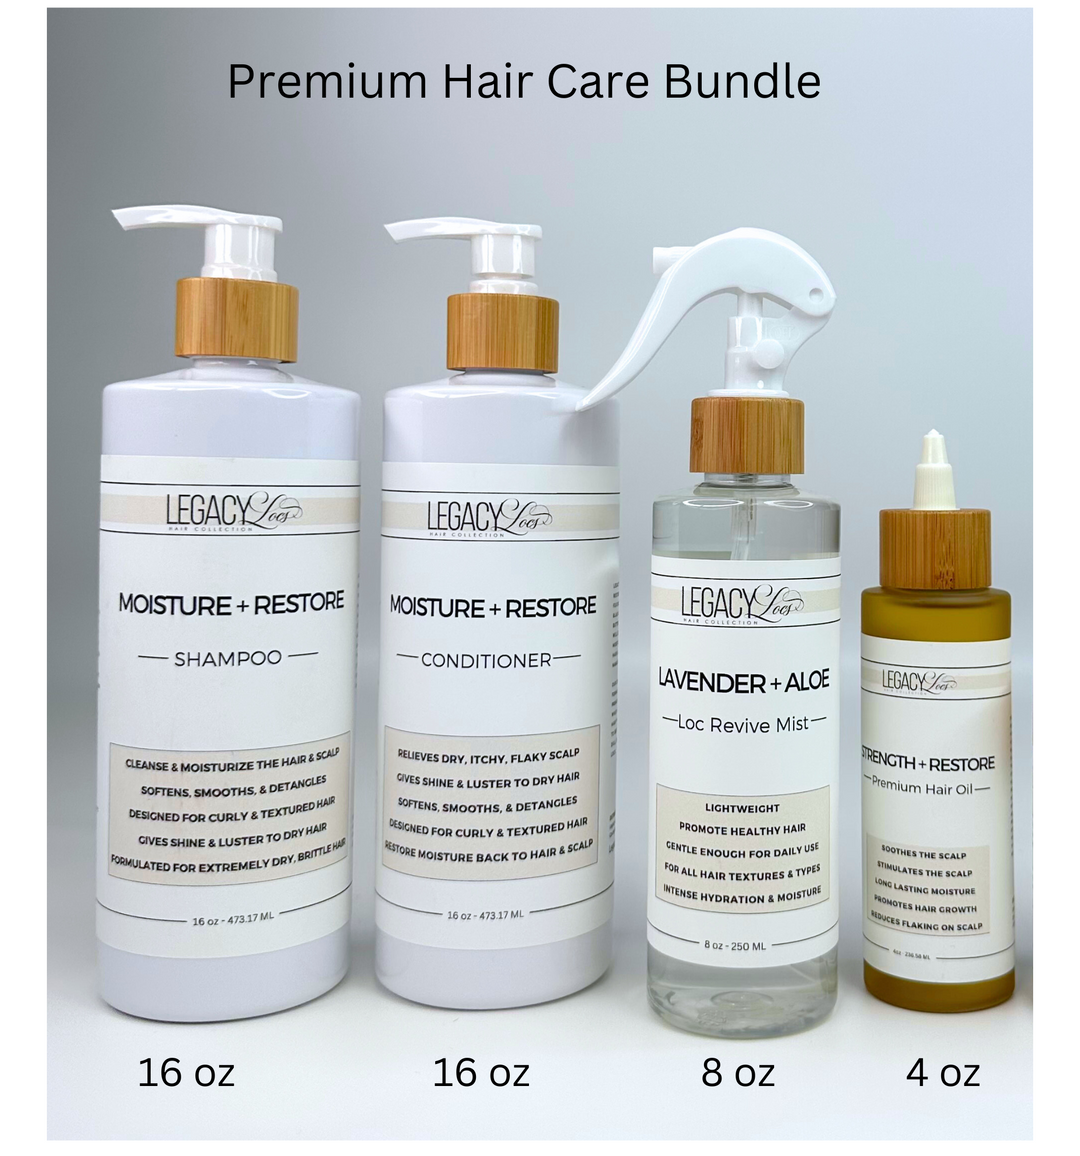 Premium Hair Care Product Bundle